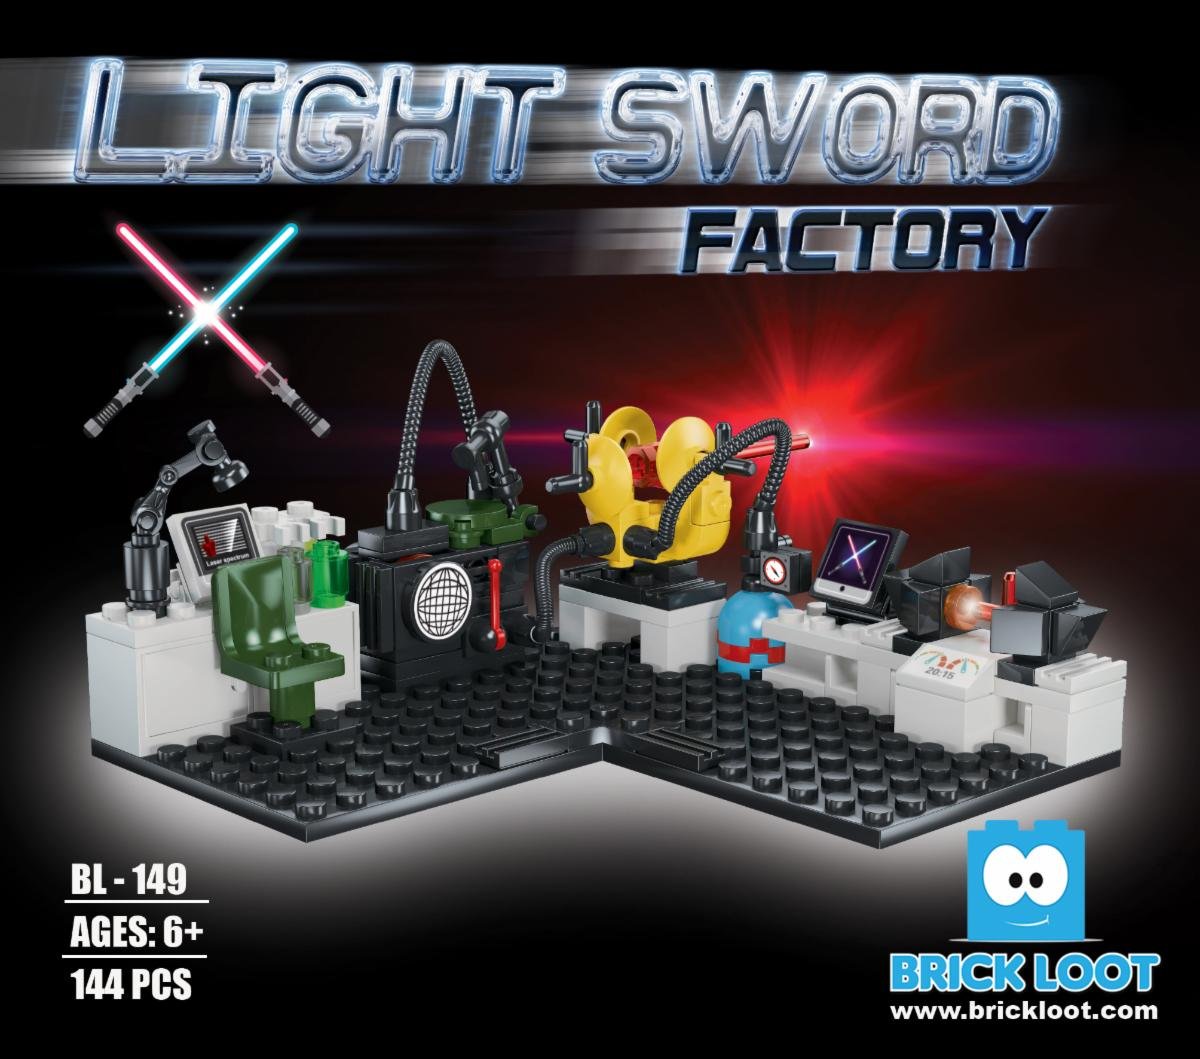 Light Sword Factory Brick Set Brick Loot-sm.jpg